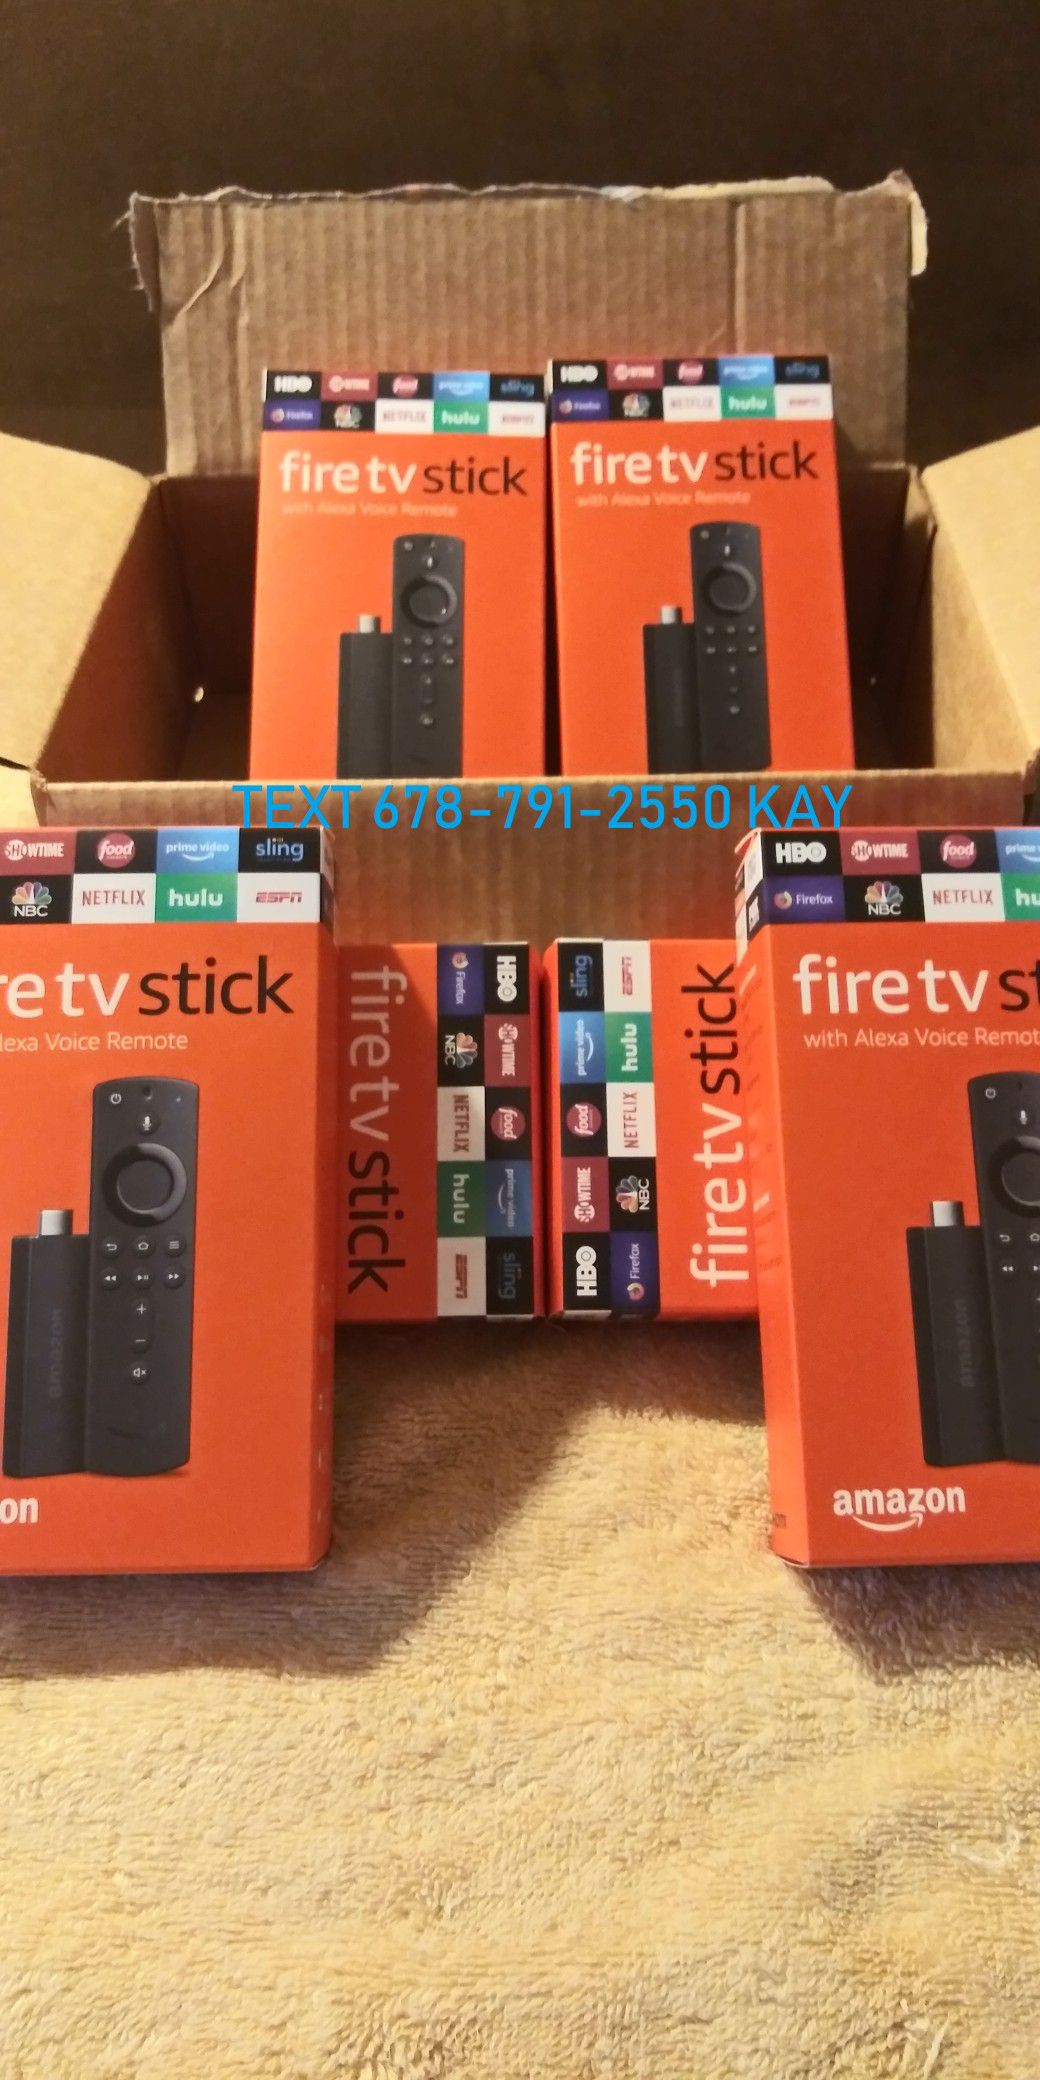 [Fire TV Stick] Amazon [Live channels] Best on offerup